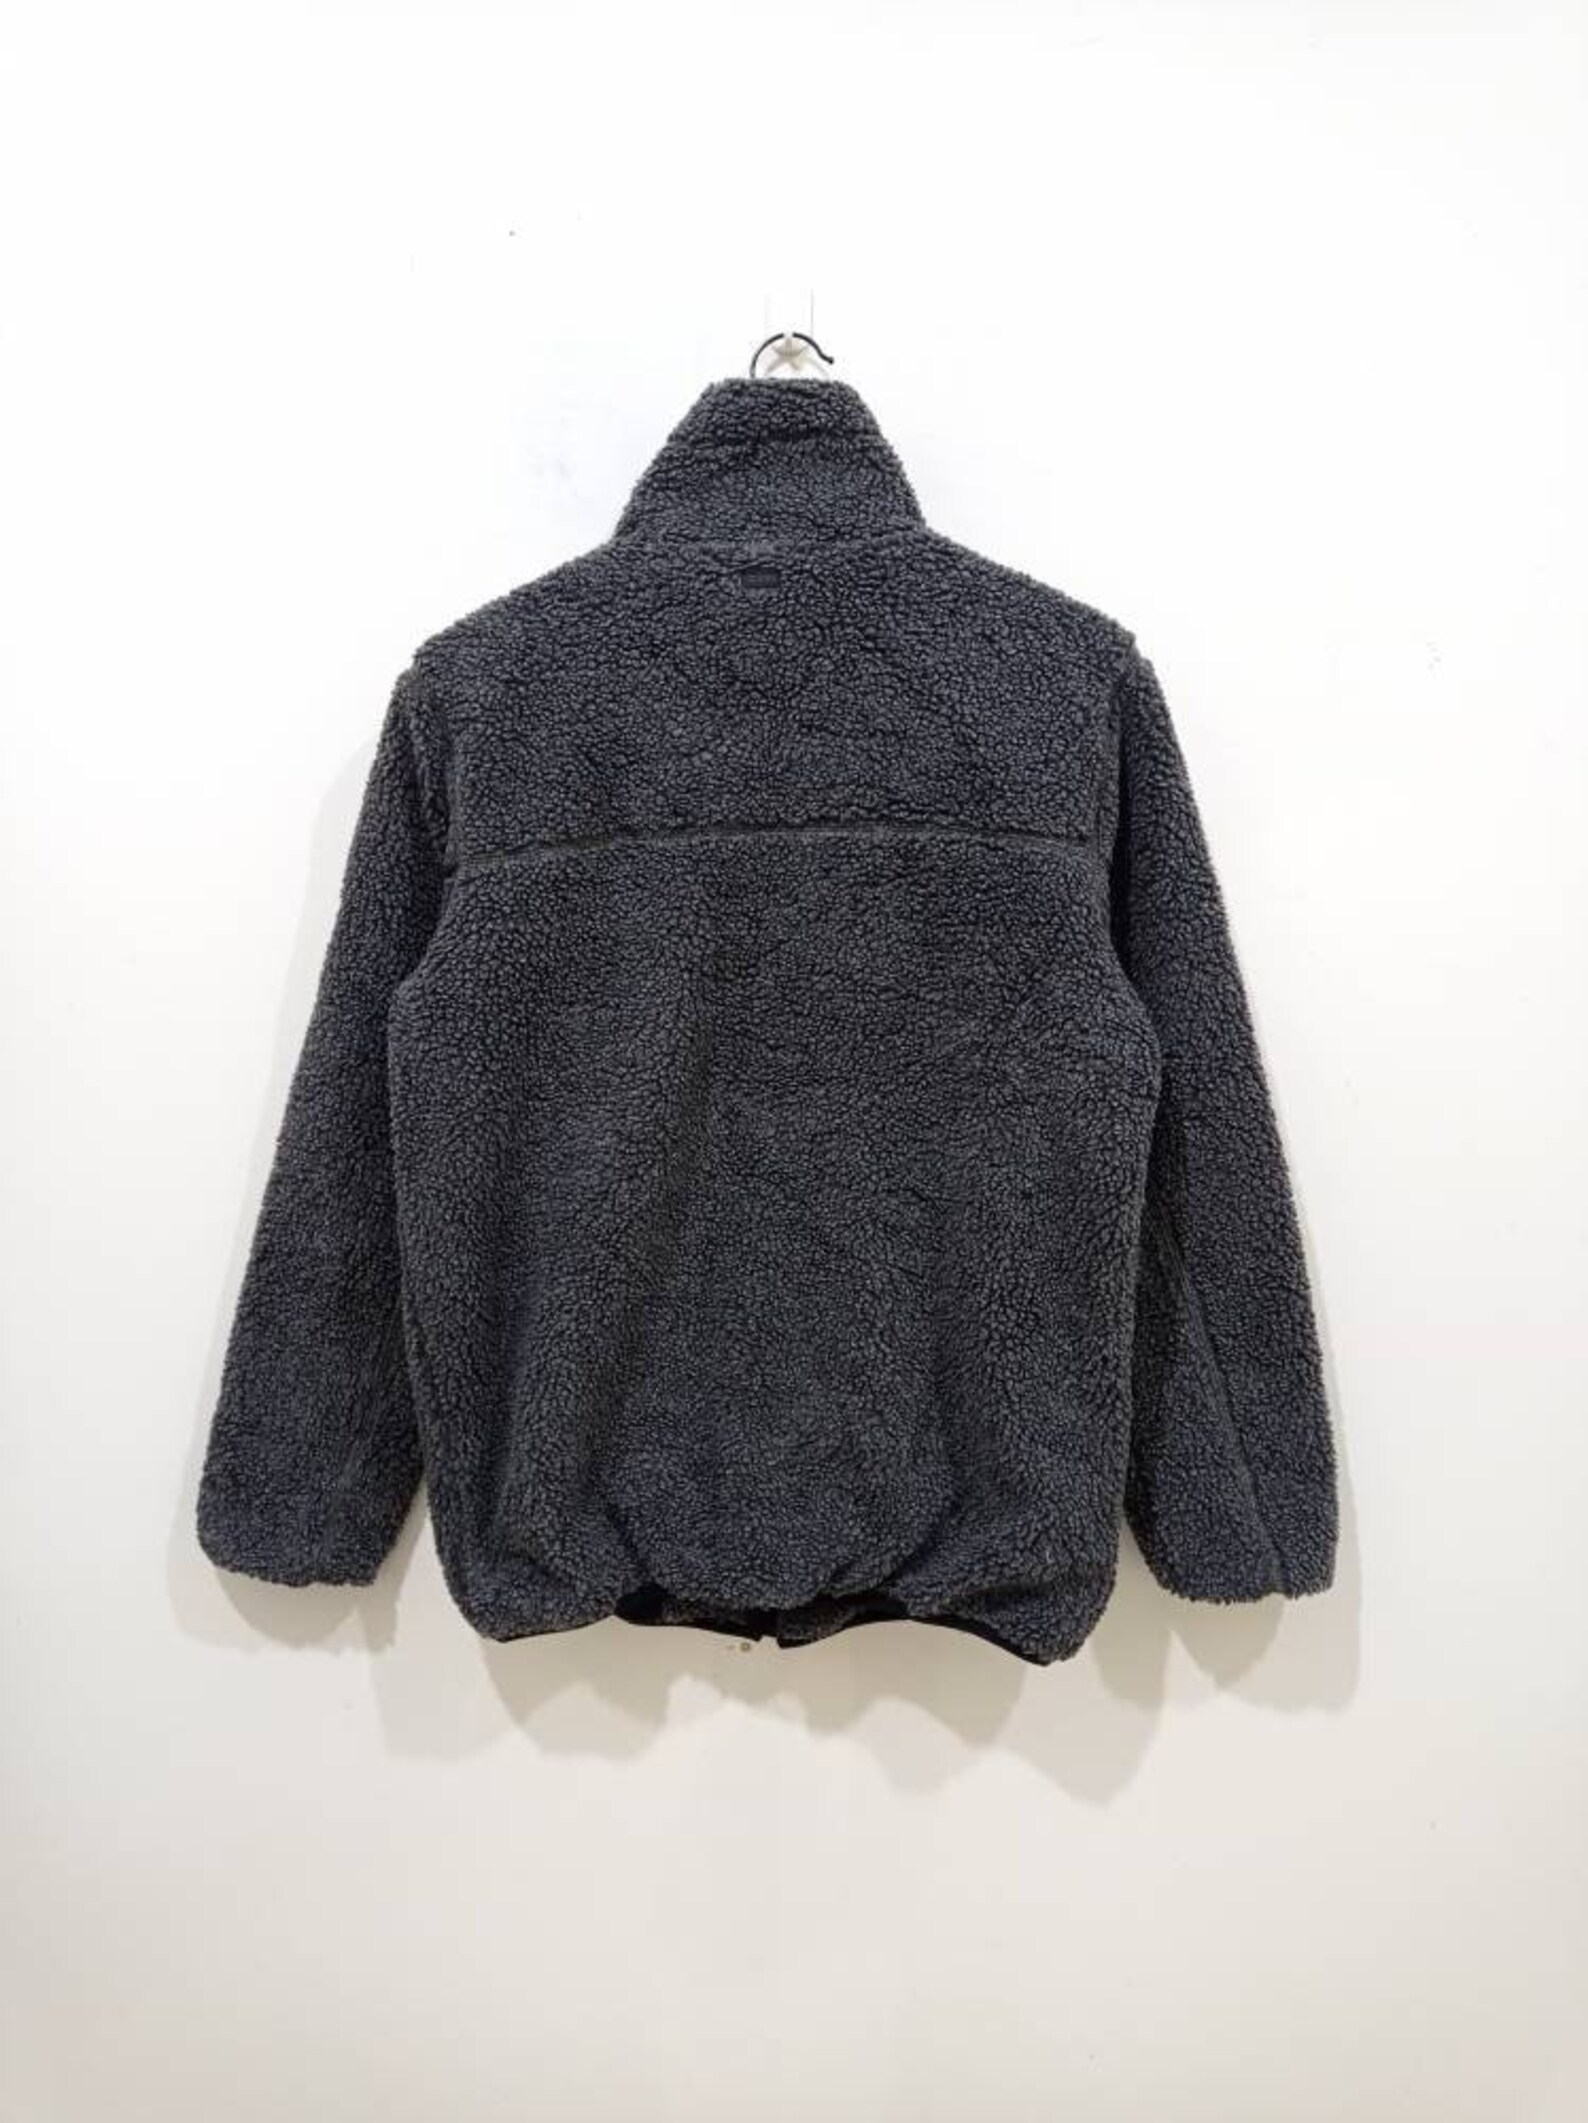 Vintage 90s Billabong fleece jacket size M L | Etsy